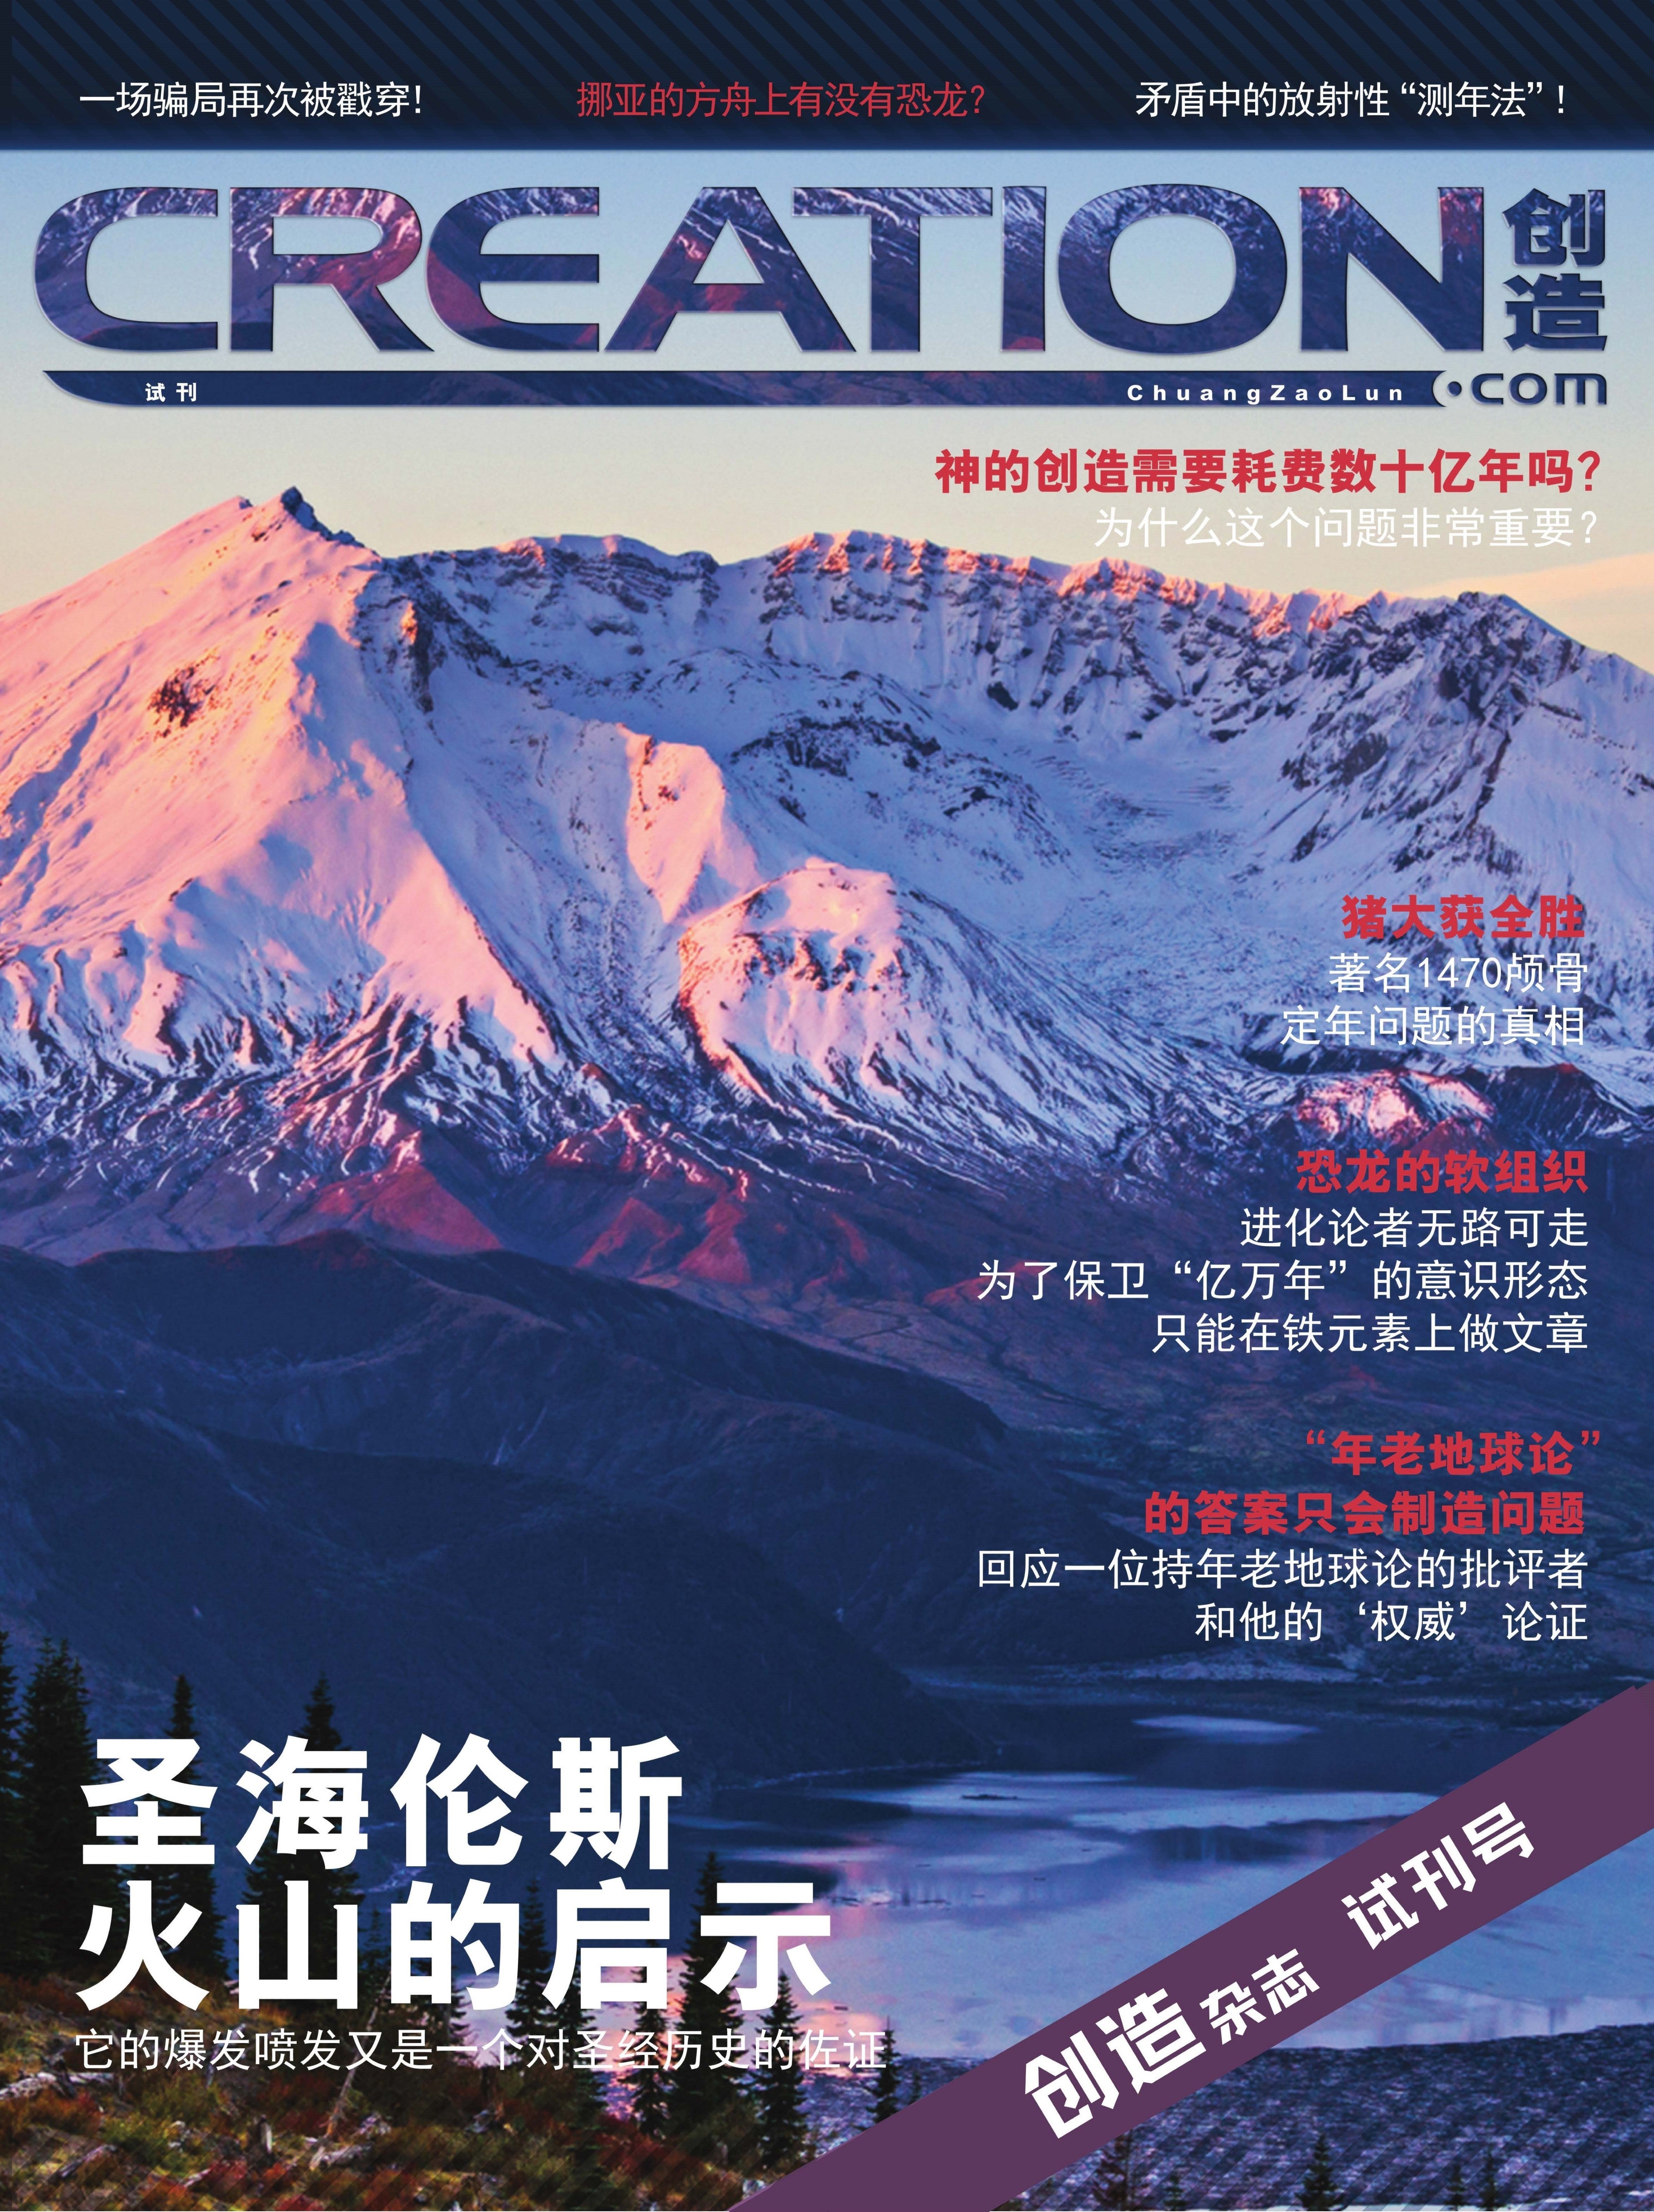 創造論雜誌-試讀版-簡體  Creation Magazine -Trial Issue